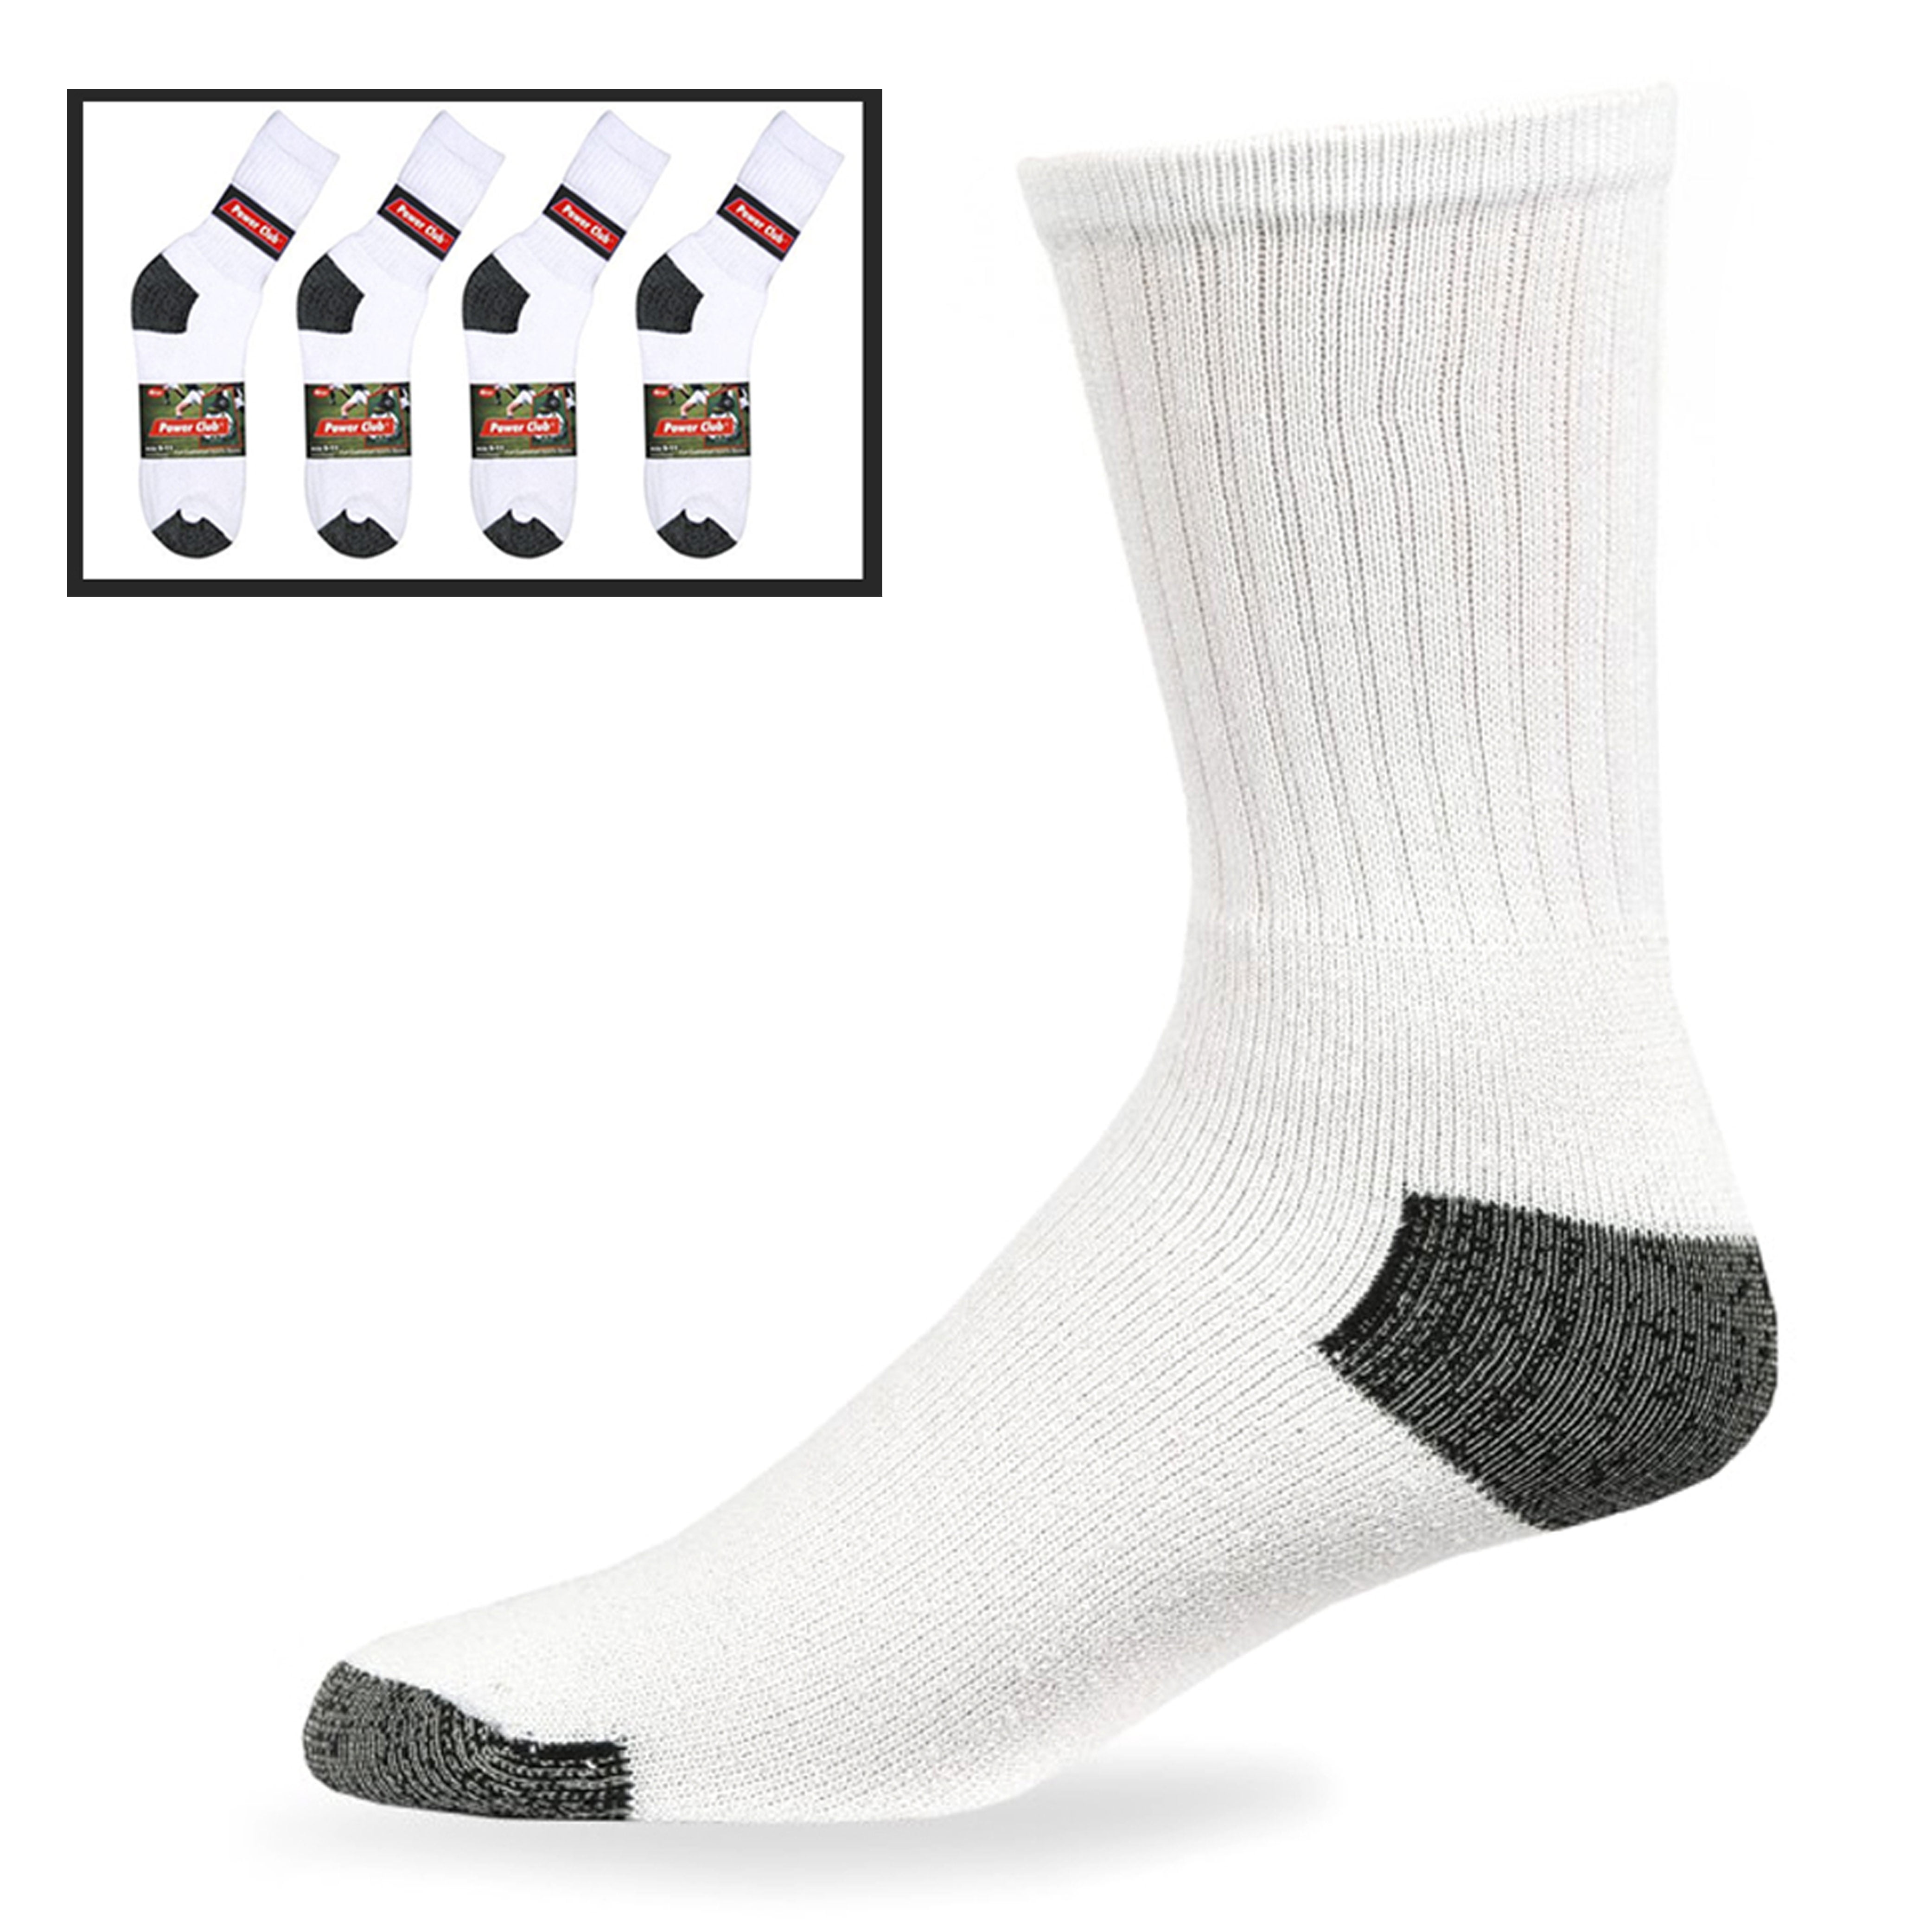 1 Dozen 4-12 Pairs Men's Thick Sports Cotton Ankle Socks Size 10-13 White Black 